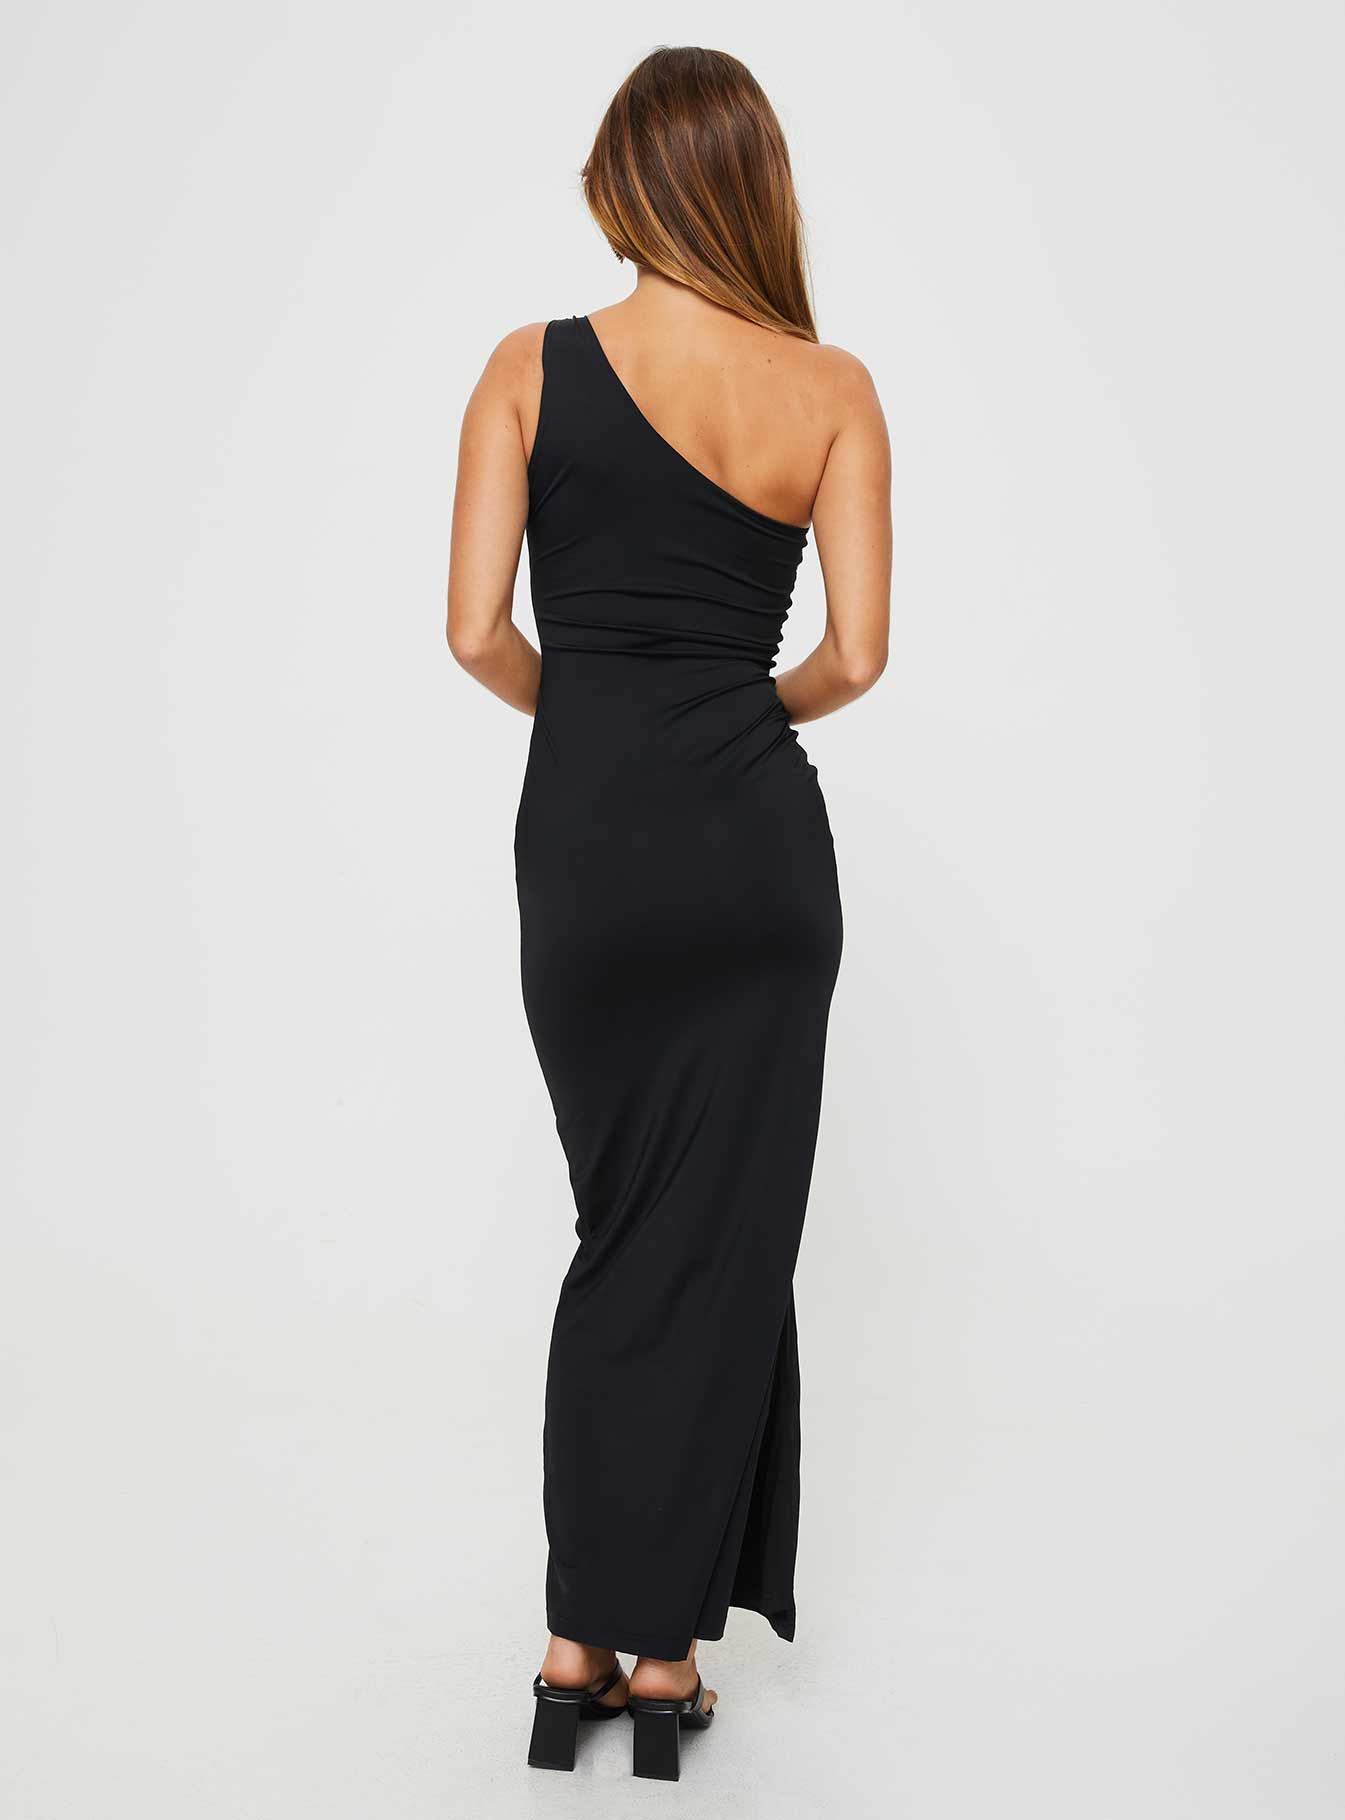 Shop Formal Dress - Toomba Maxi Dress Black secondary image